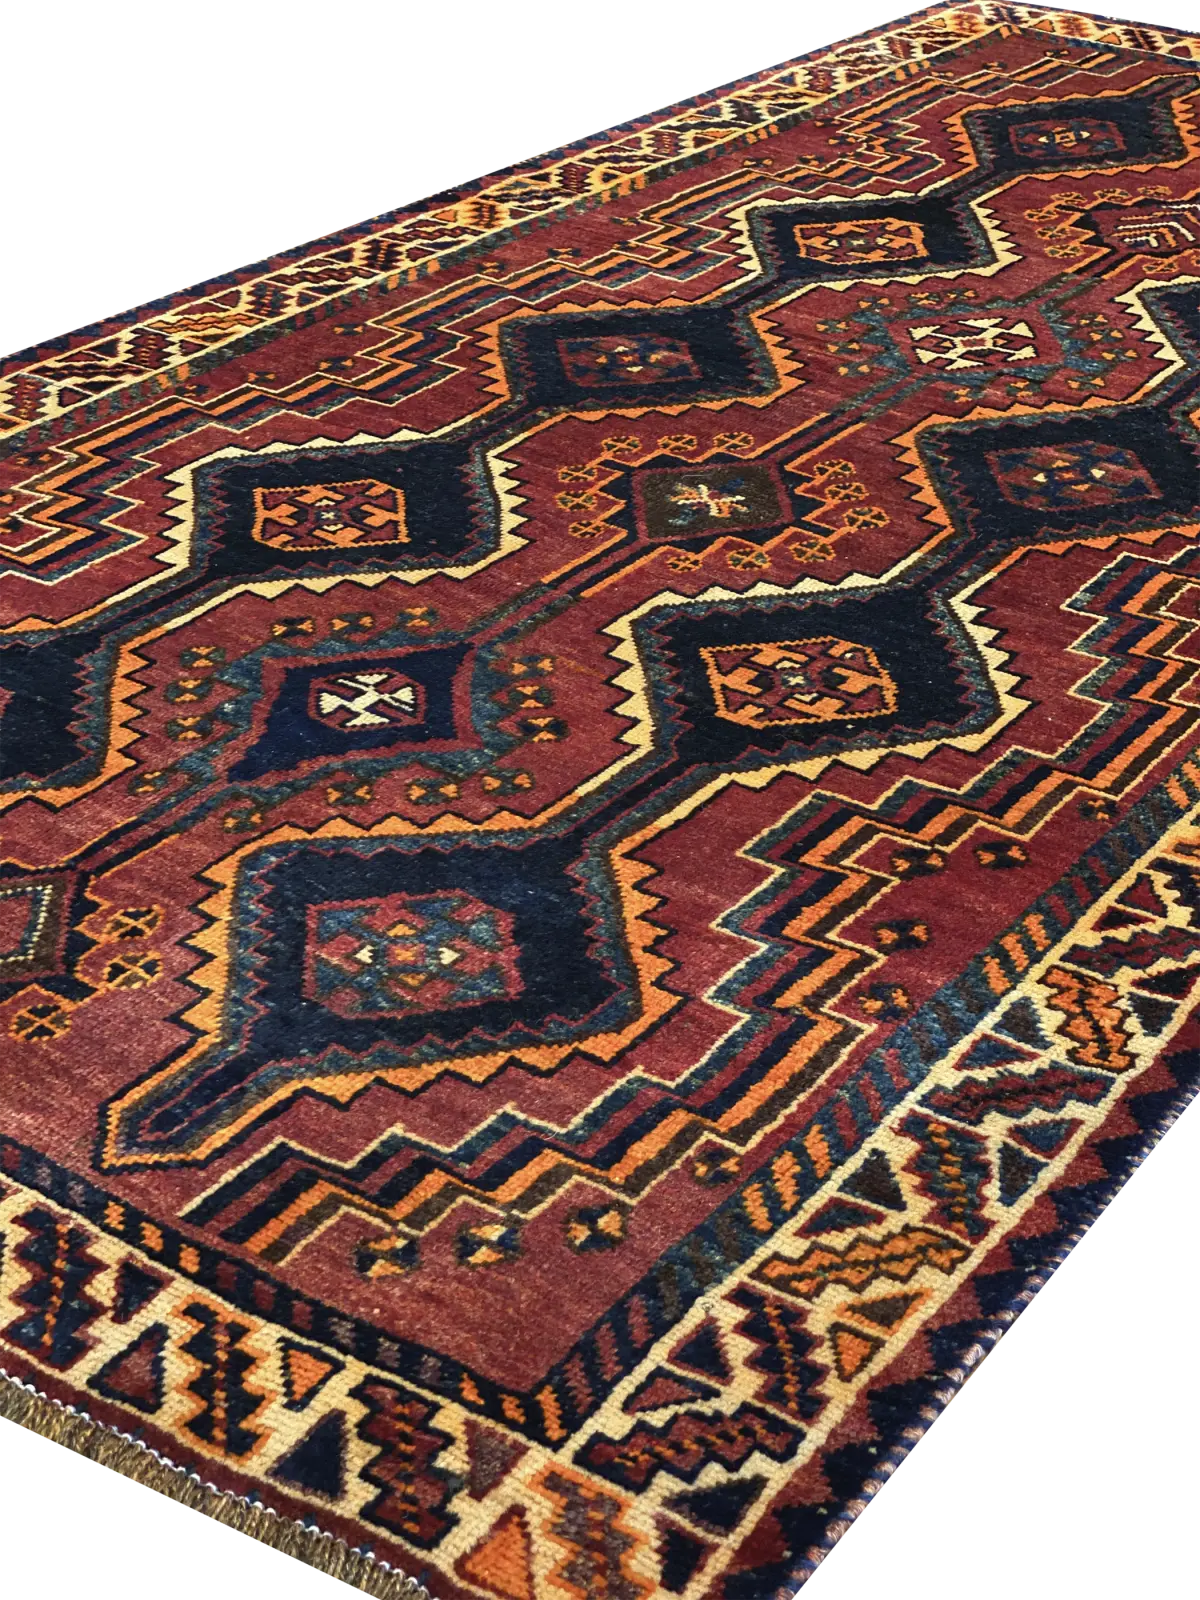 Antique Persian Shiraz 4' 4" x 8' 3" Handmade Area Rug - Shabahang Royal Carpet